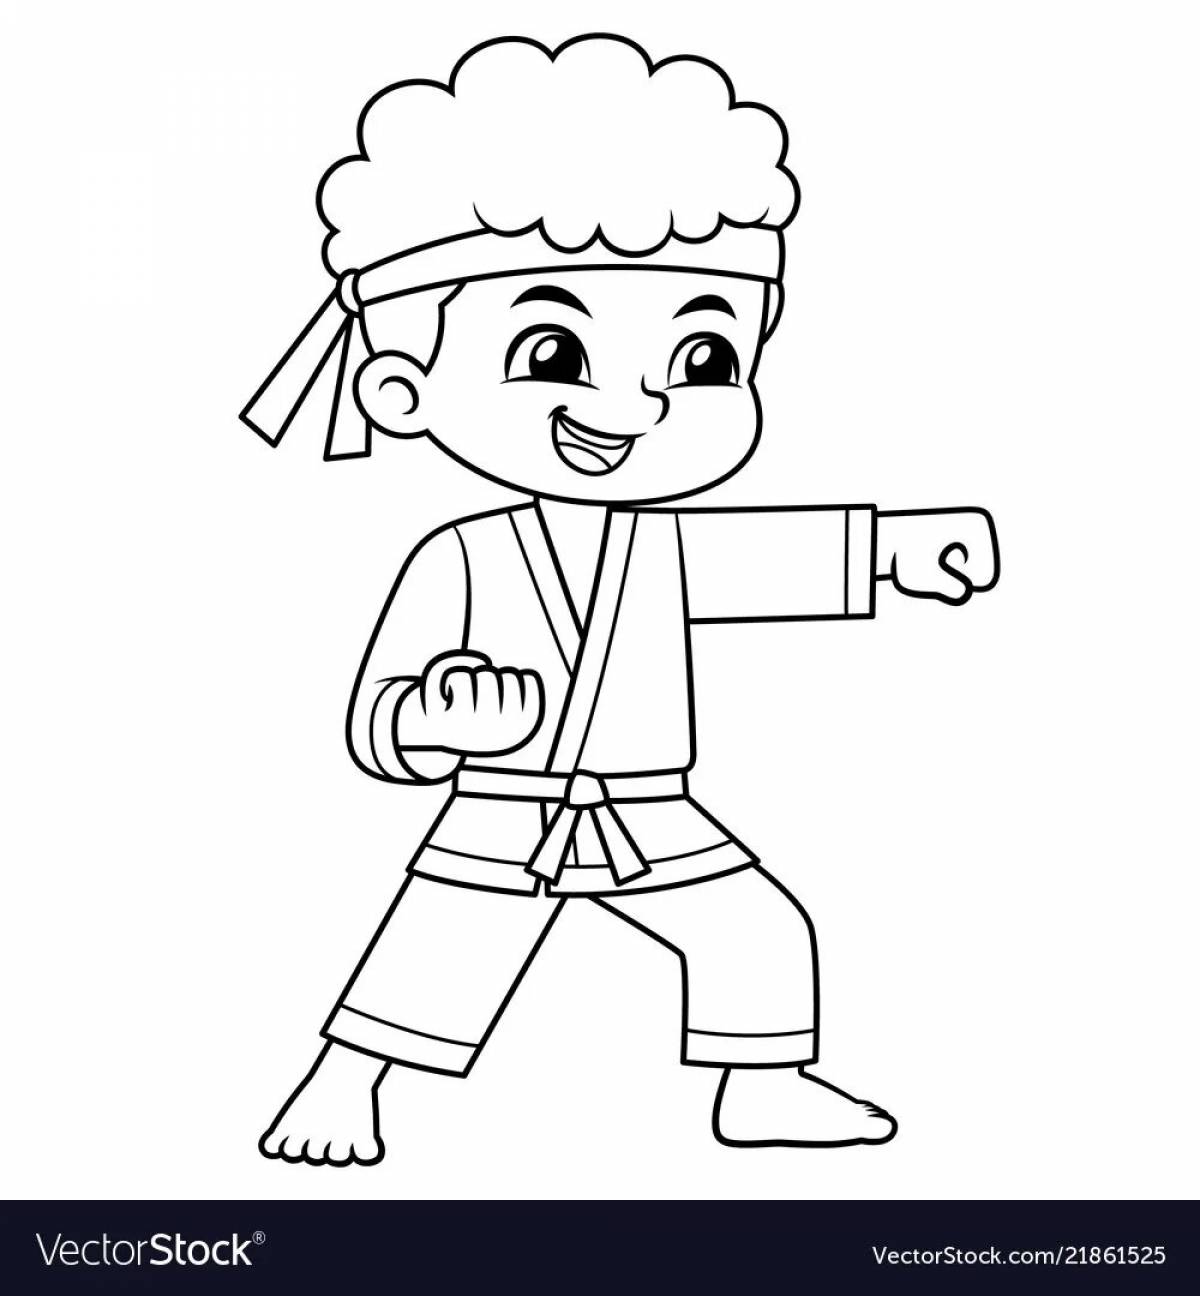 Glamorous karate for kids coloring